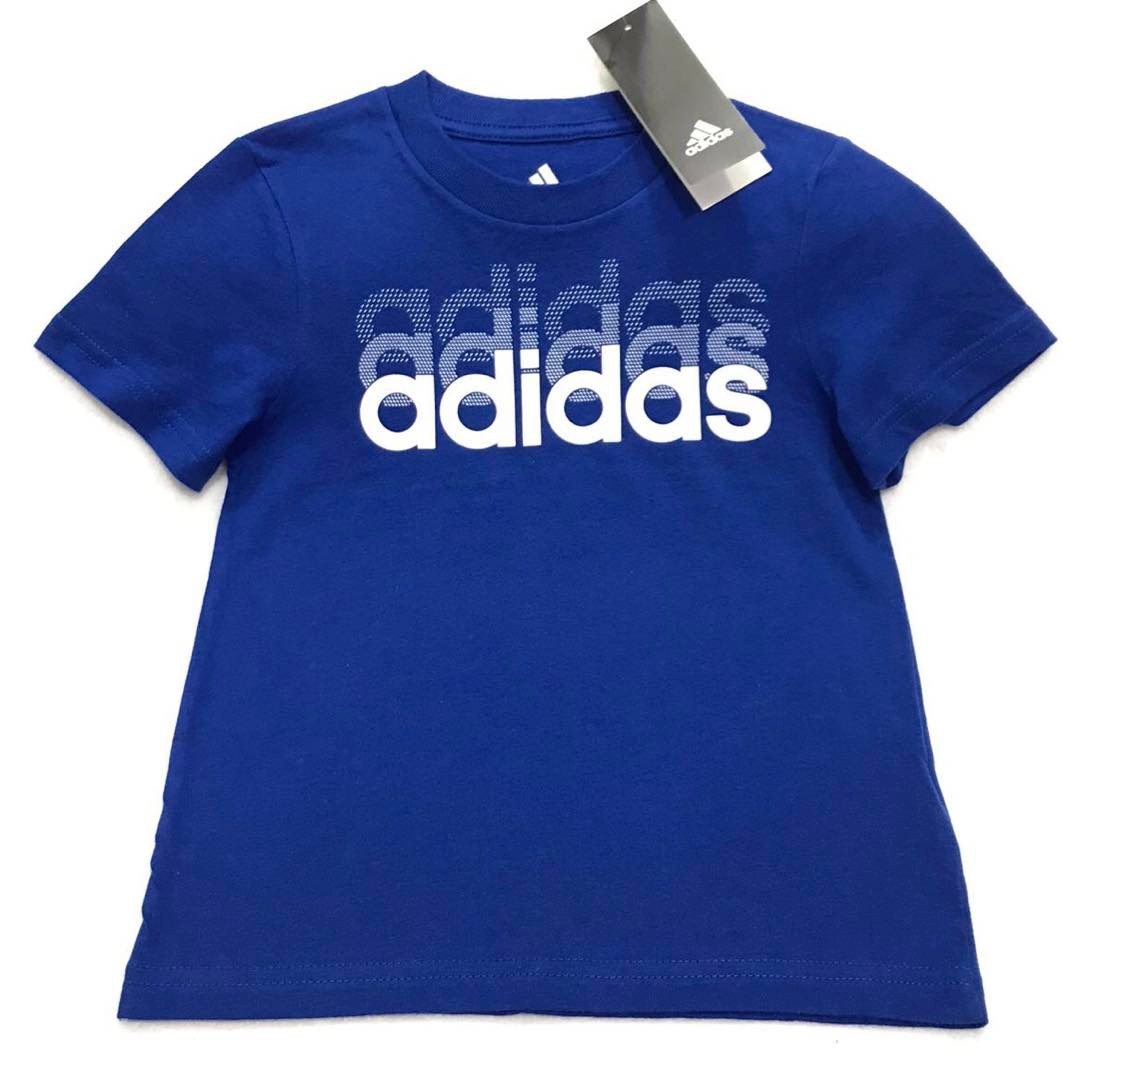 Camiseta Adidas - 3 anos - R$ 89,90